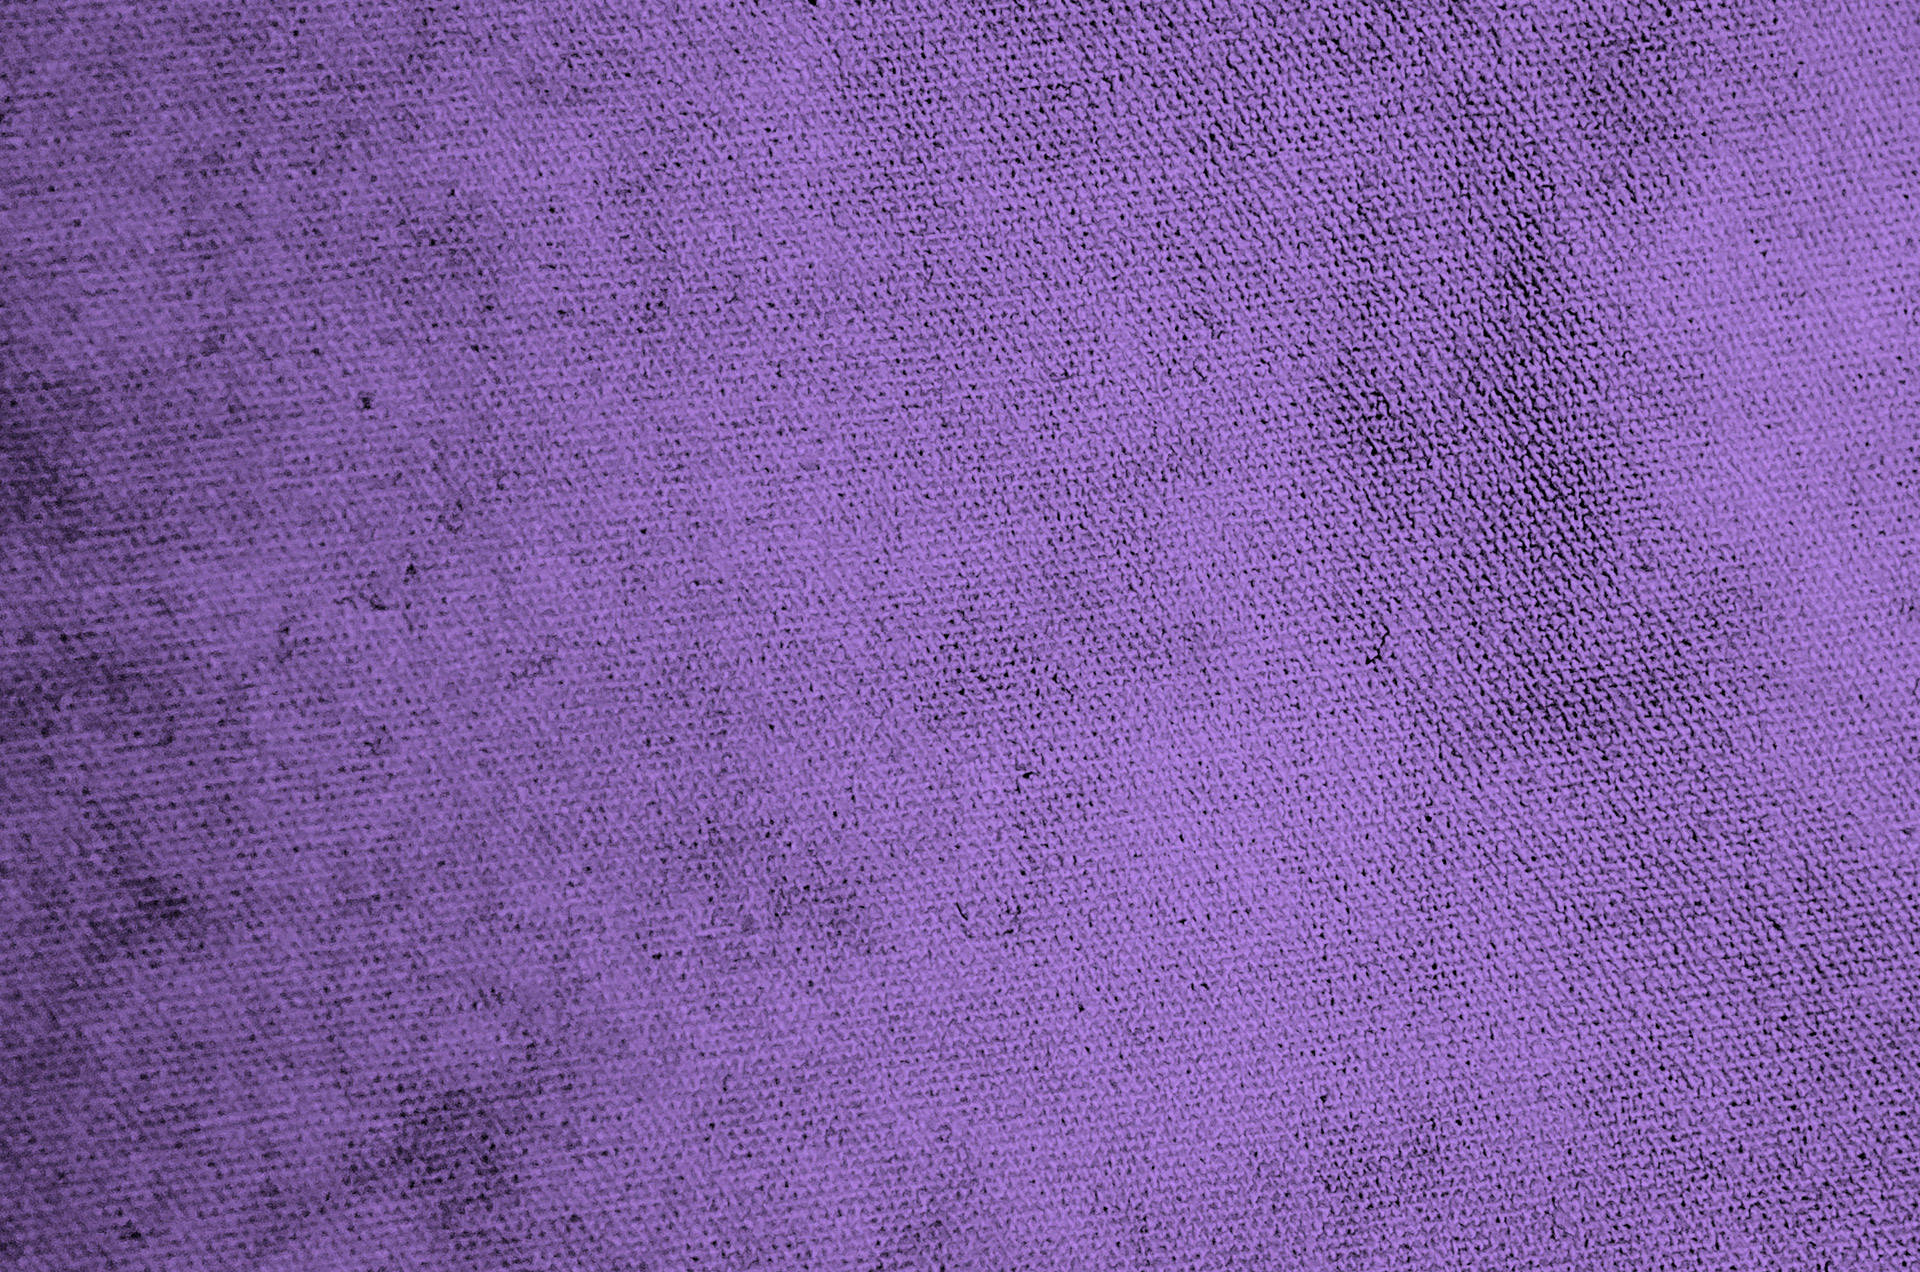 Textured Violet Backdrop Wallpaper